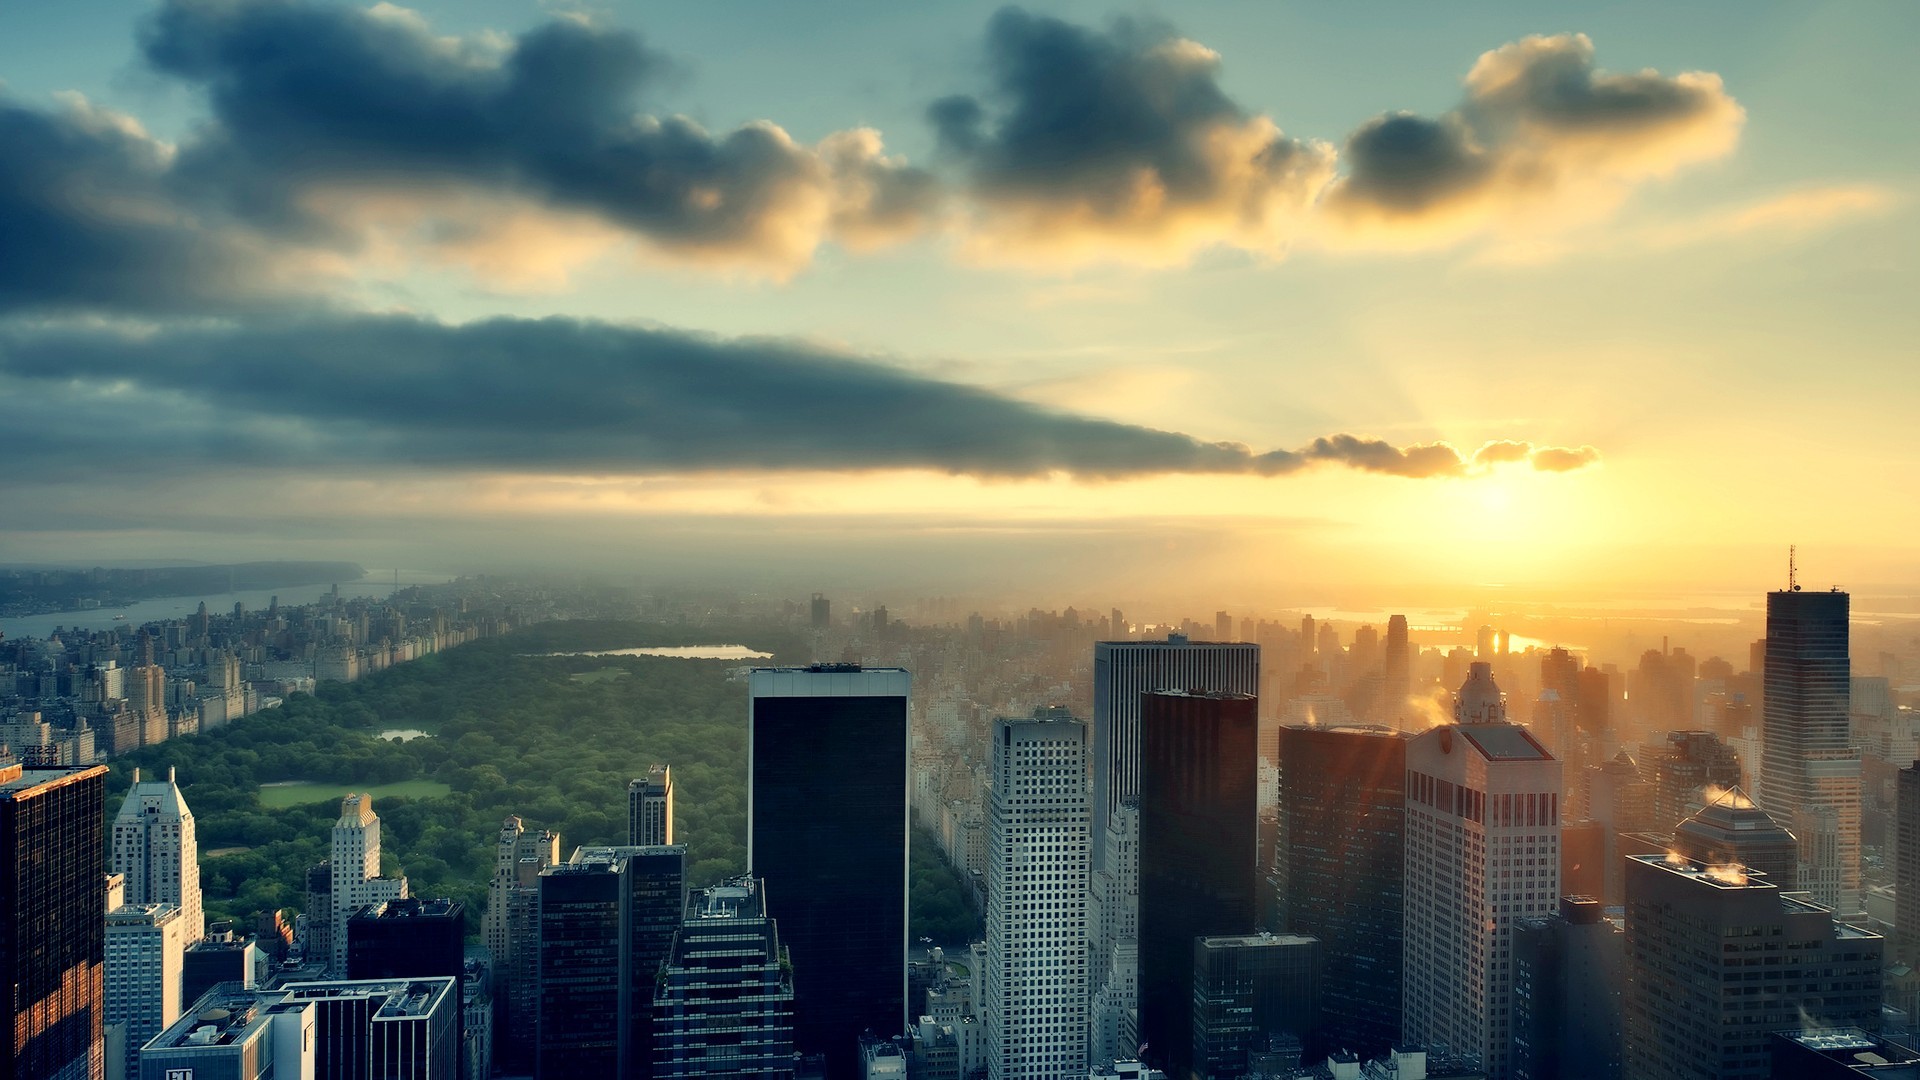 General 1920x1080 city New York City Manhattan Central Park cityscape USA sunlight clouds